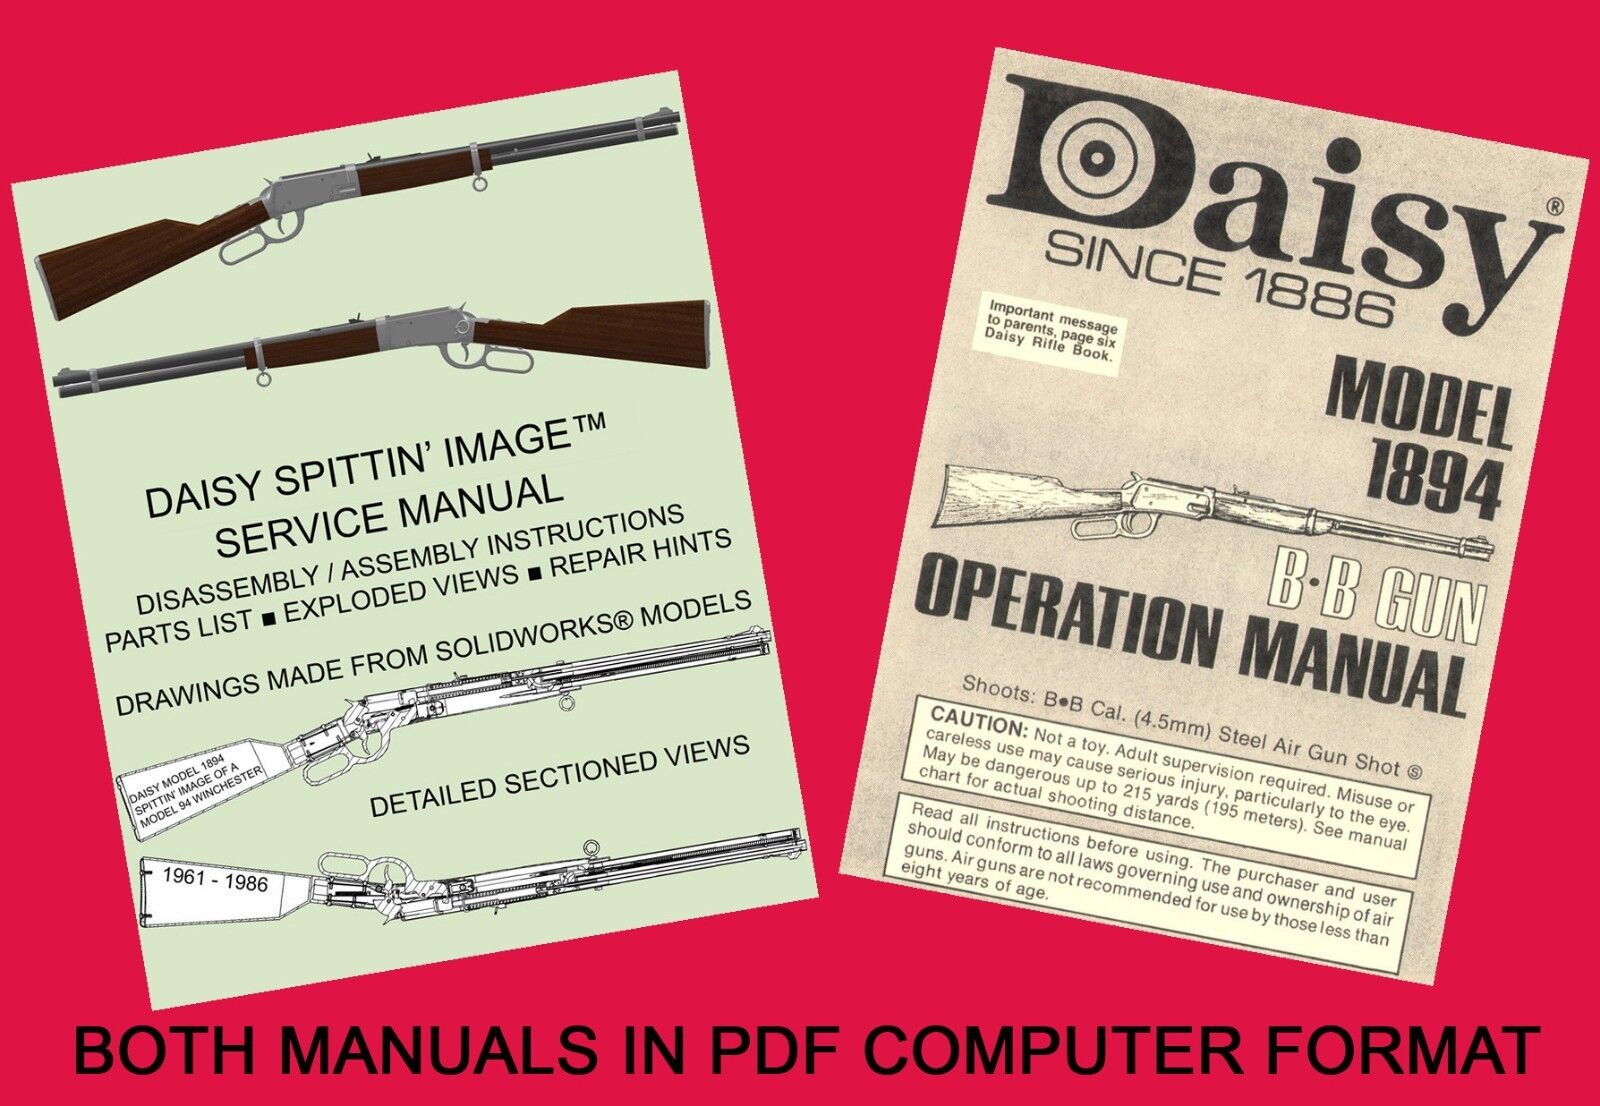 Daisy 1894 Spittin' Image™ PDF Re-drawn Service Manual + Bonus Operation Manual